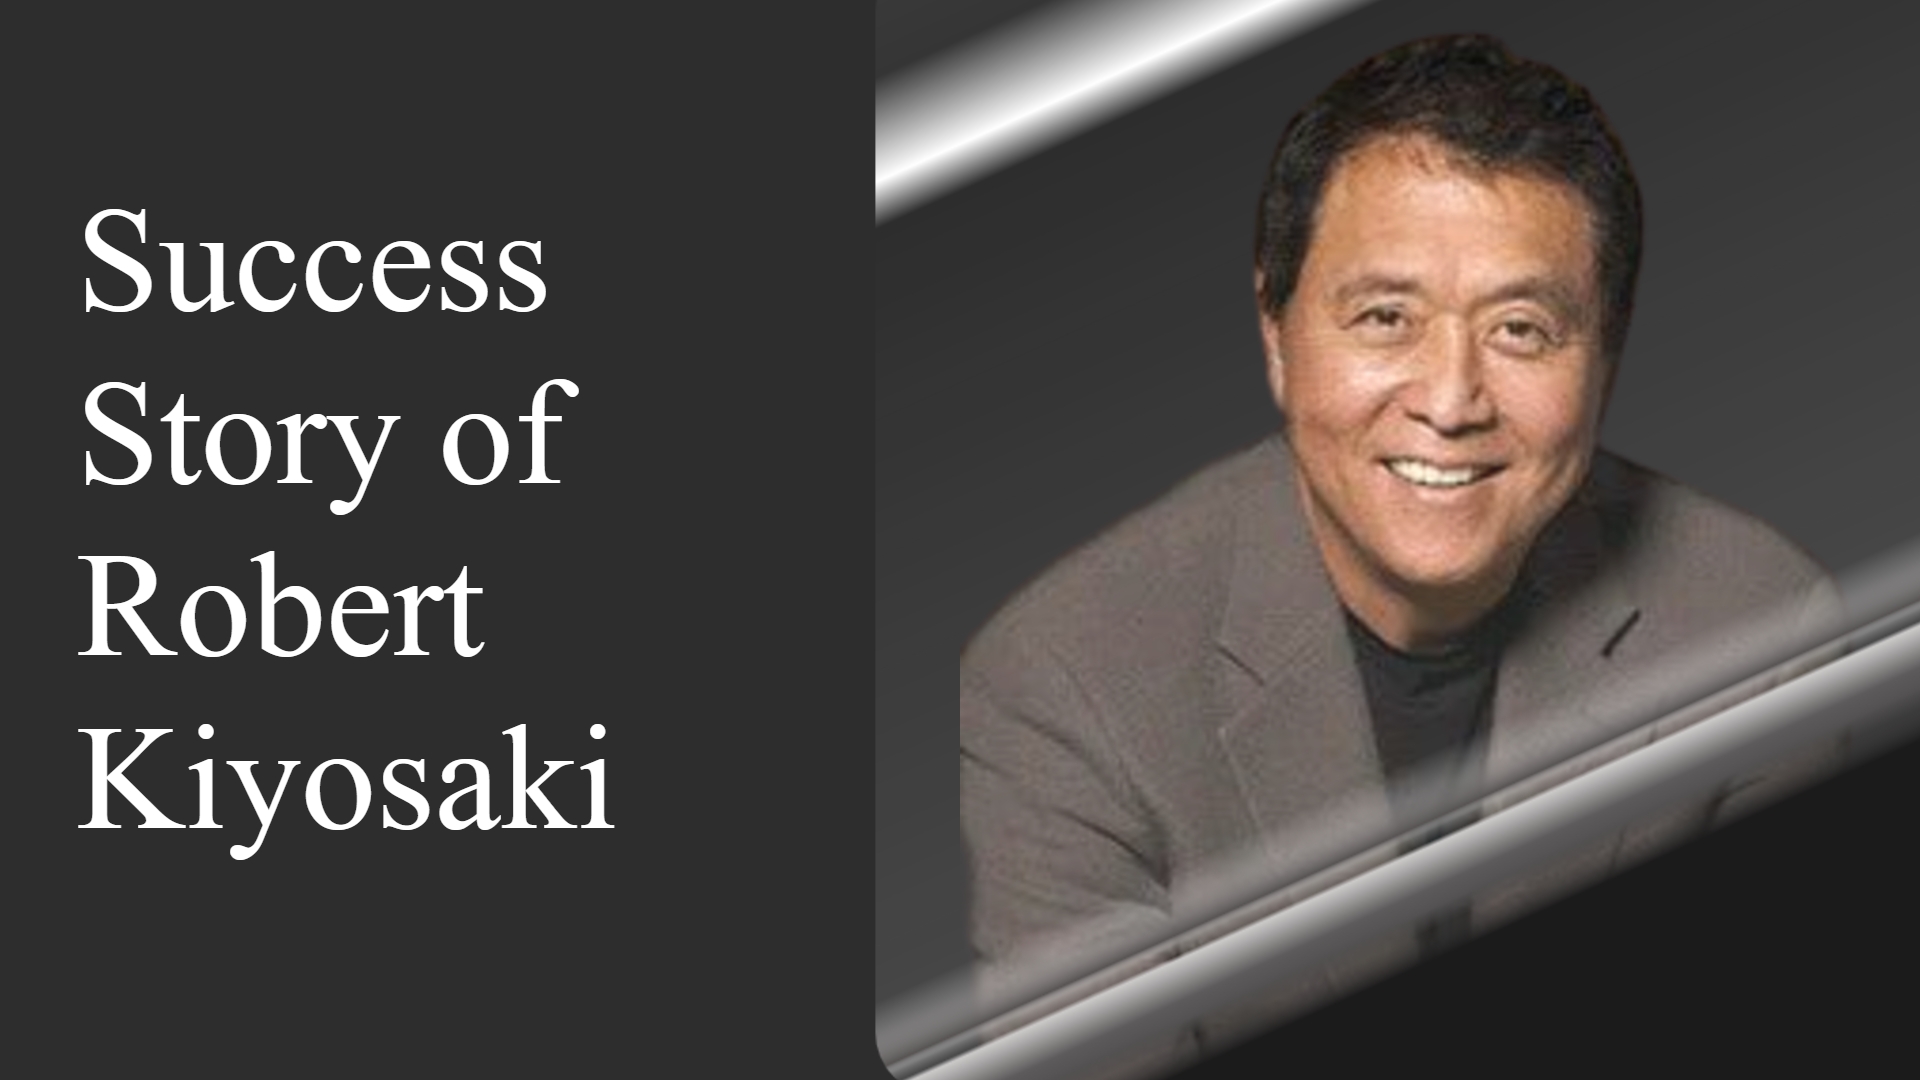 Robert kiyosaki Success Story, Biography, Journey 